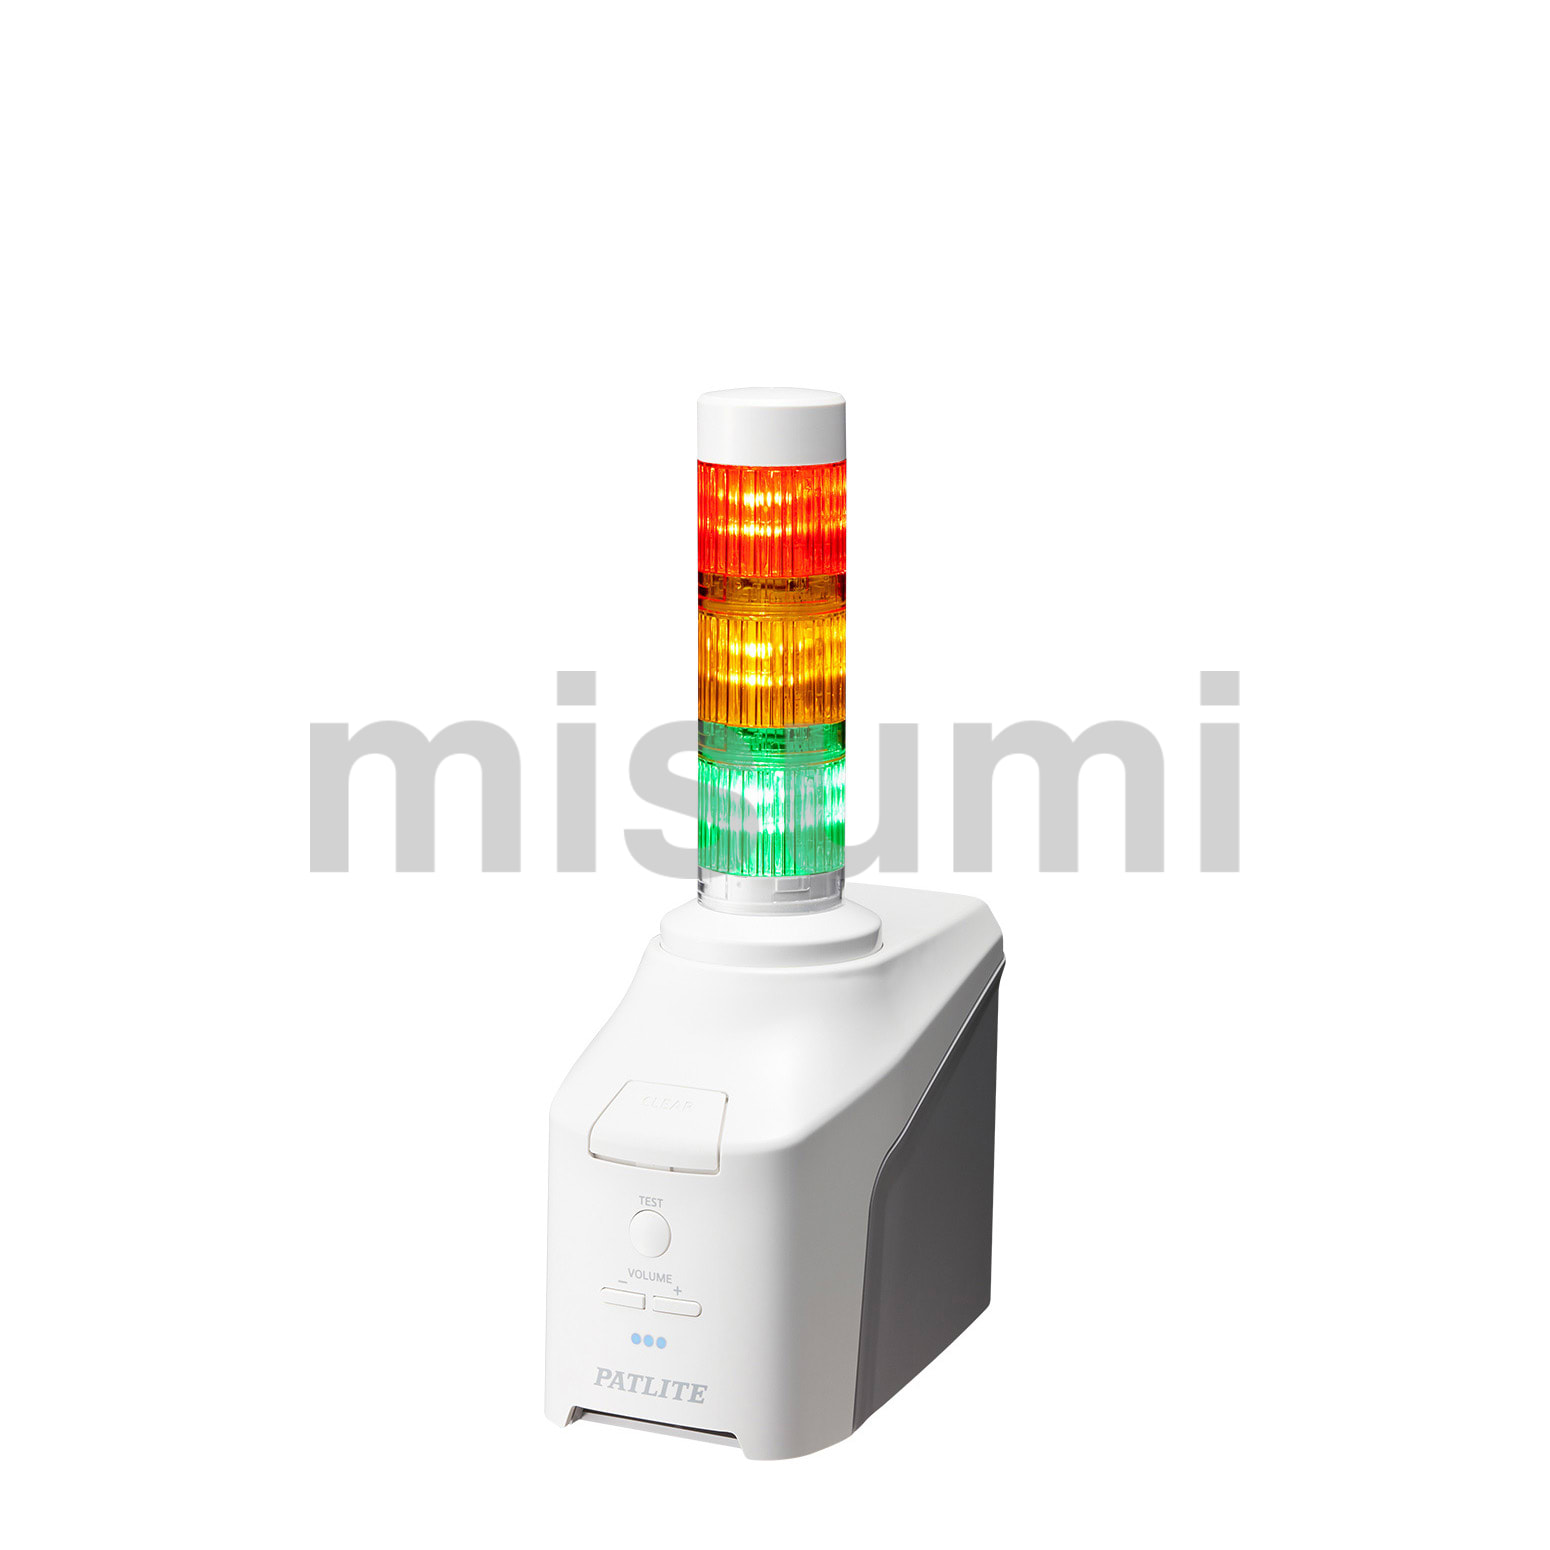 LKEH-110FA-B LED積層信号灯付き電子音報知器 LKEH パトライト MISUMI(ミスミ)